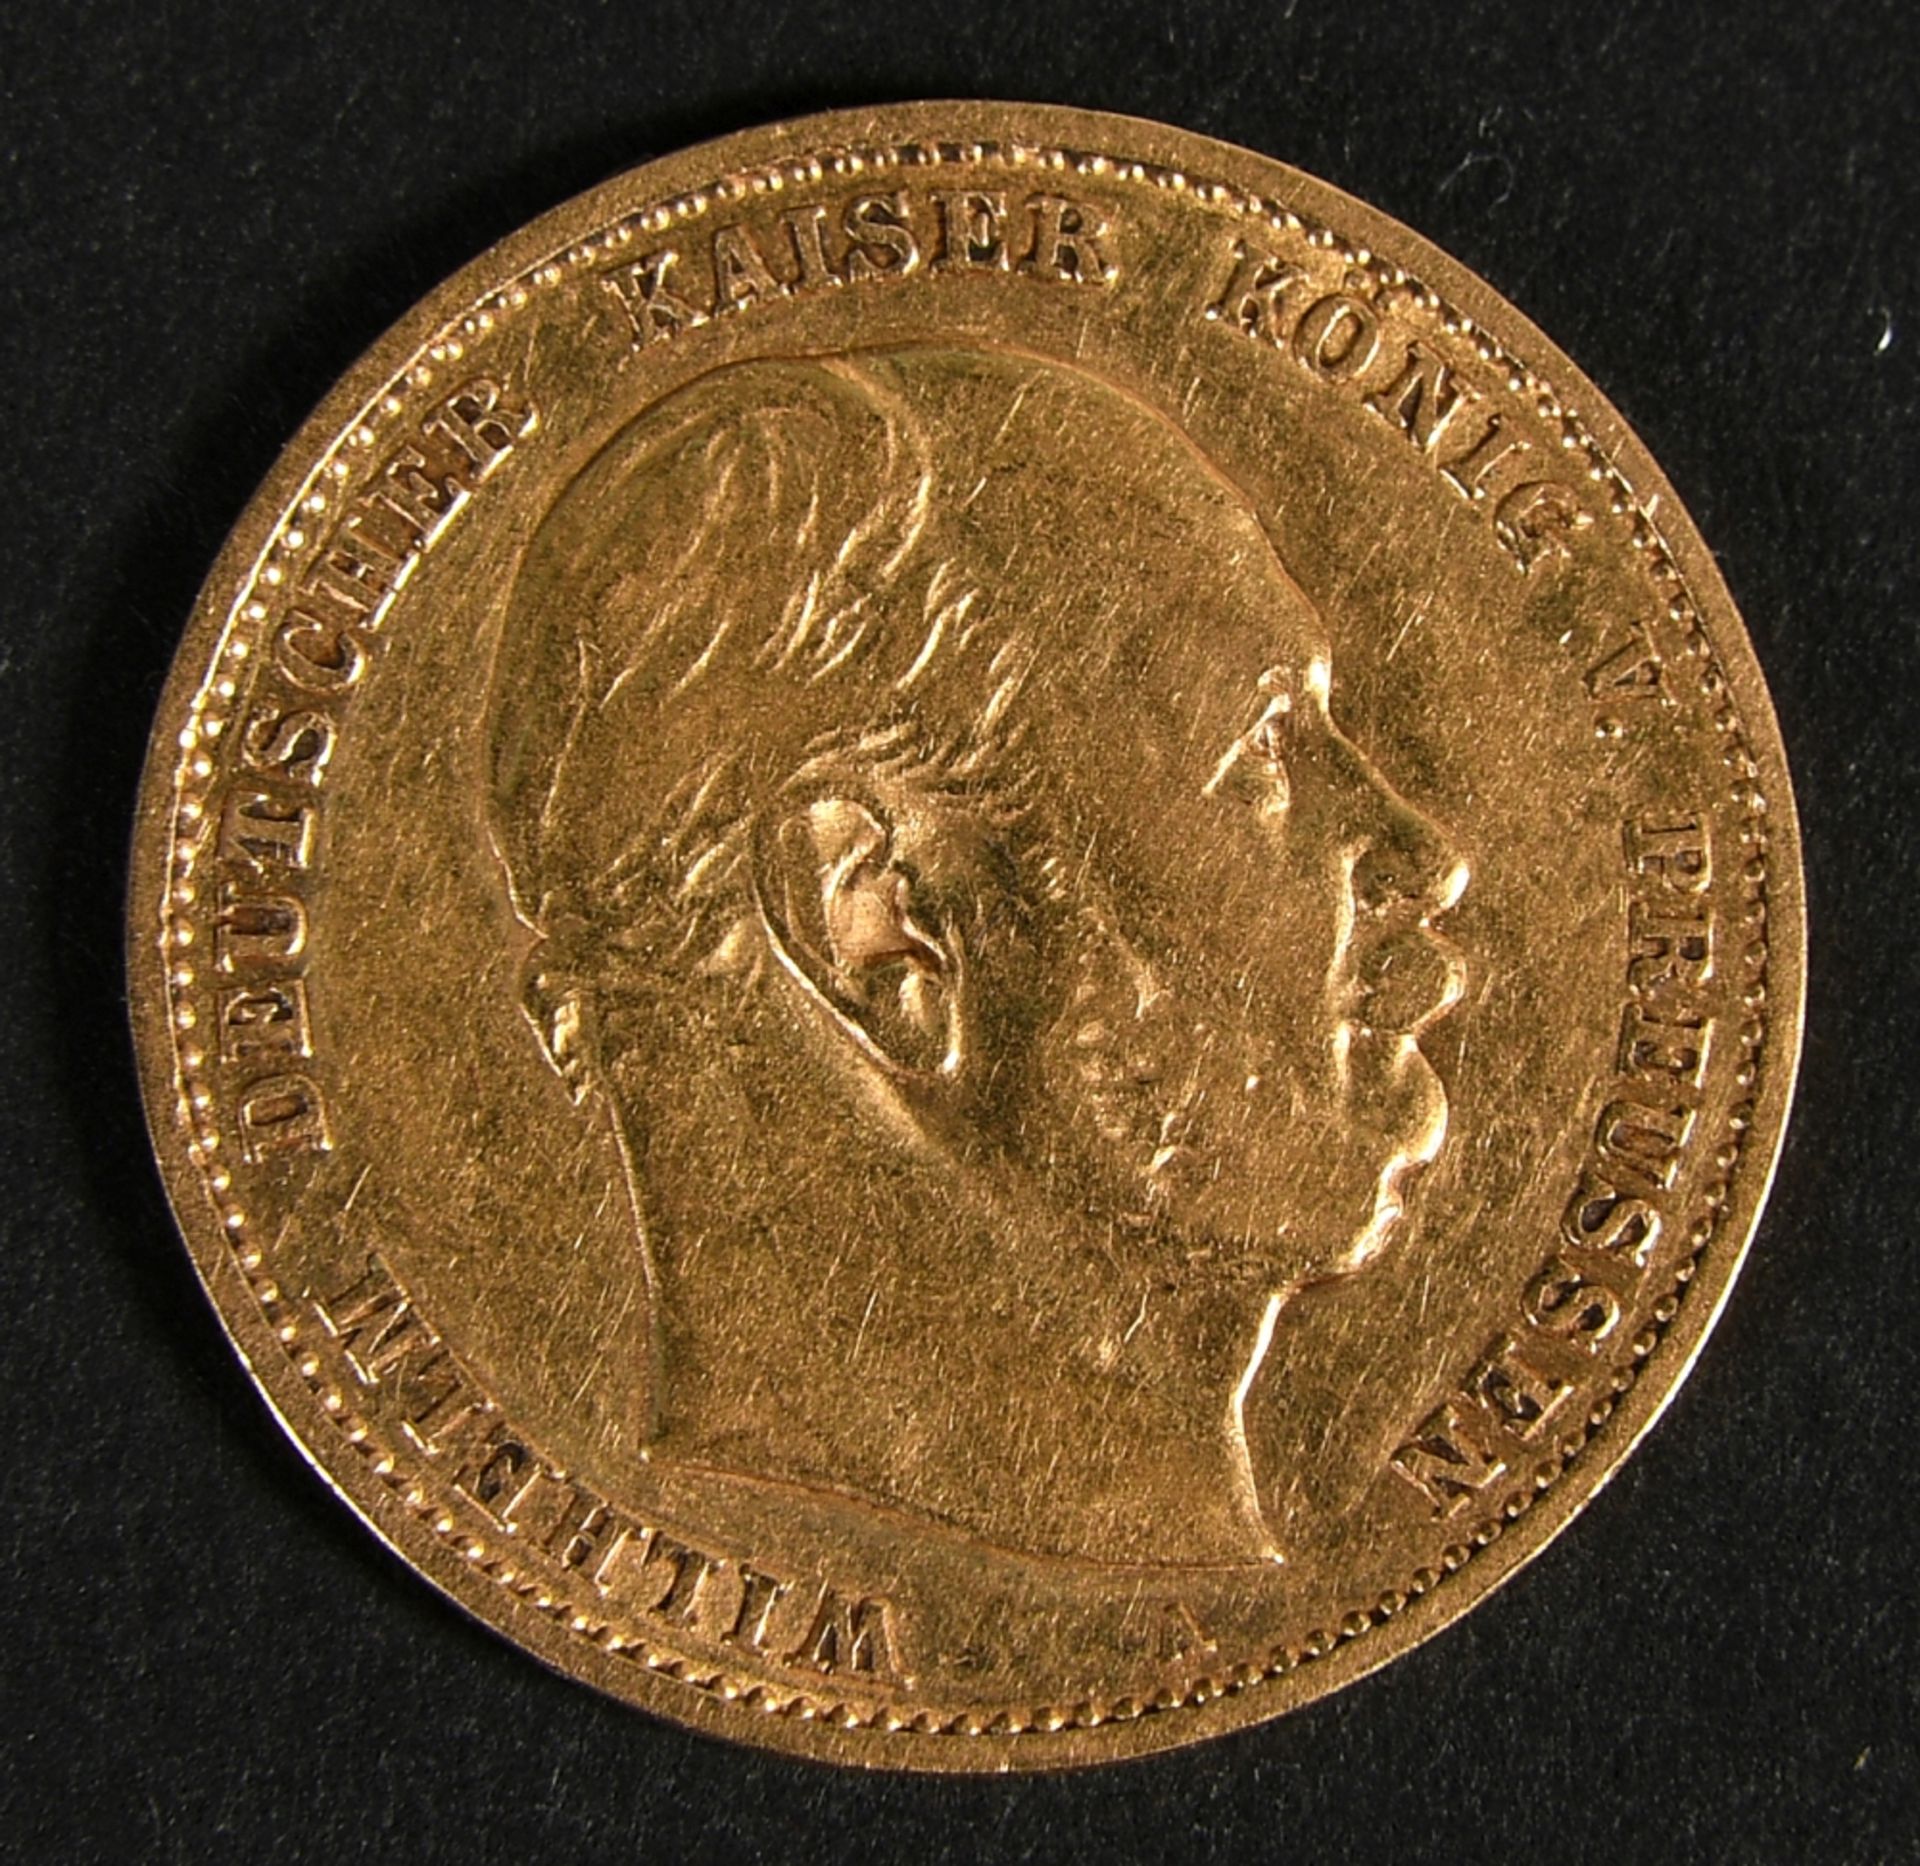 Münze - Goldmünze "10 Mark 1879" - Image 2 of 3